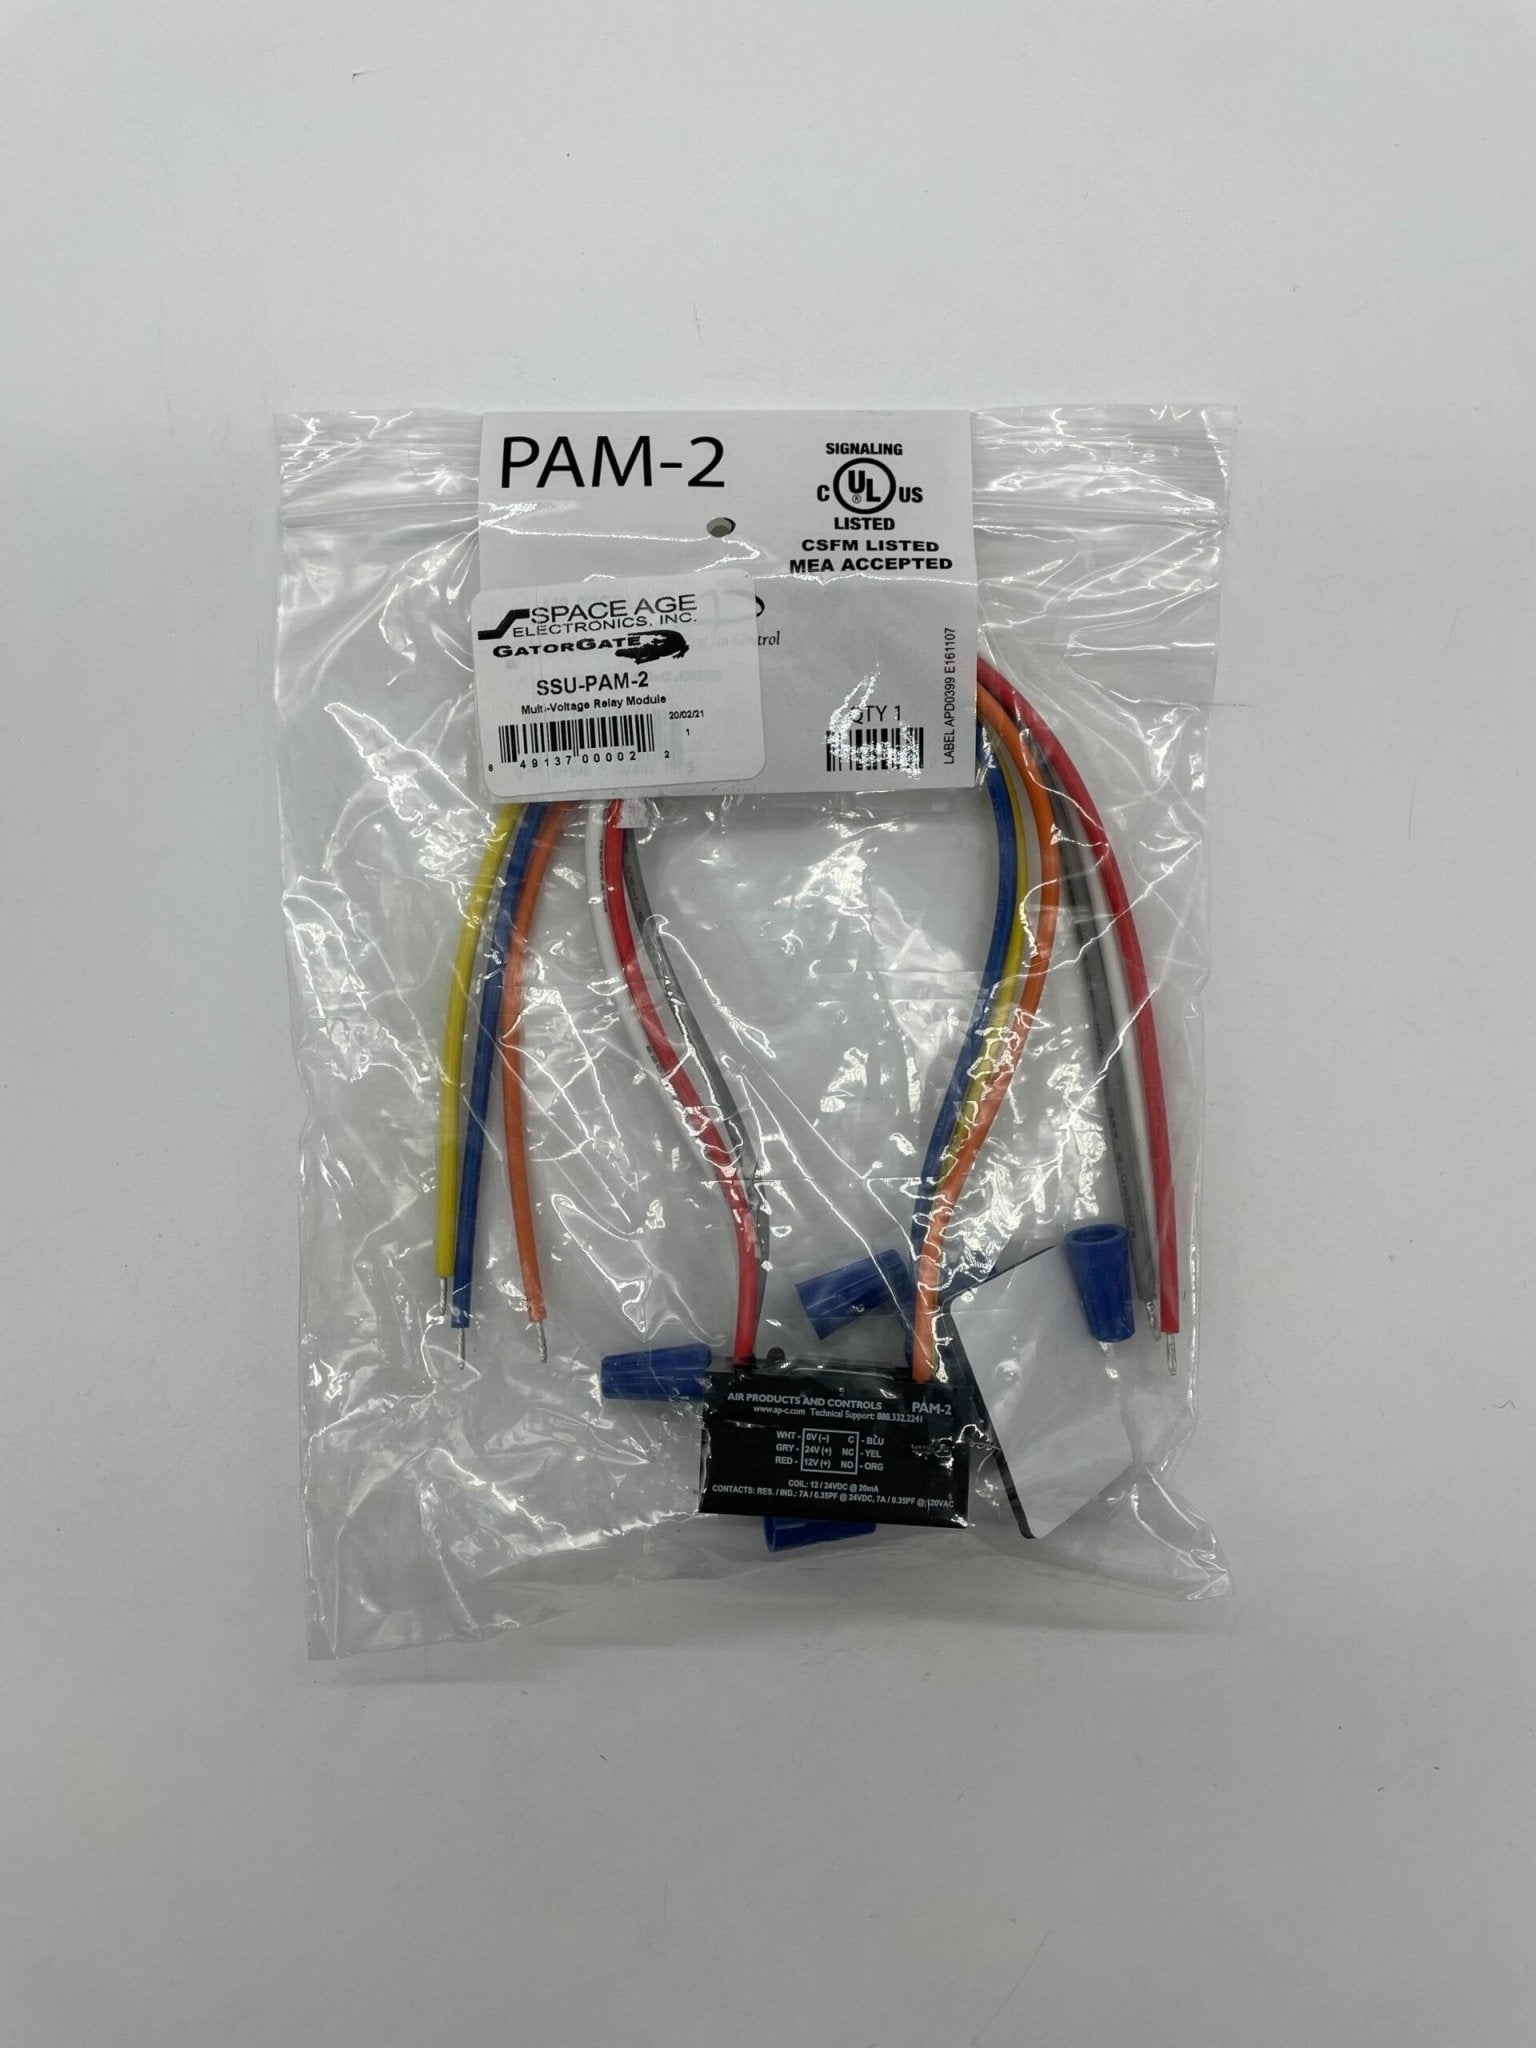 Firelite PAM-2 - The Fire Alarm Supplier